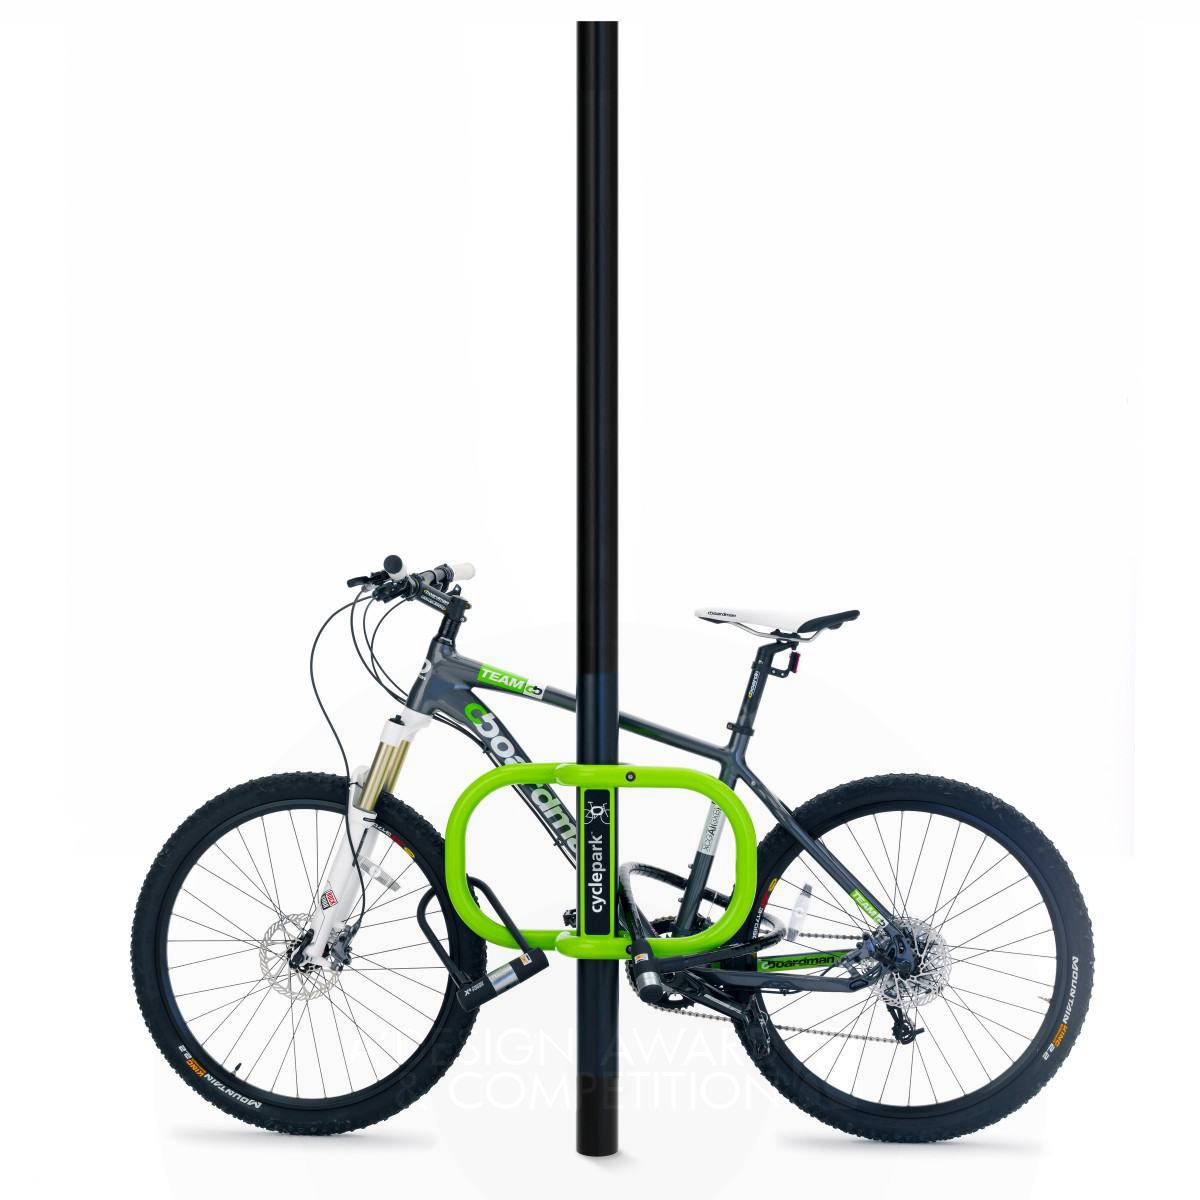 Smartstreets-Cyclepark™ Transformational bike parking by SMARTSTREETS LTD